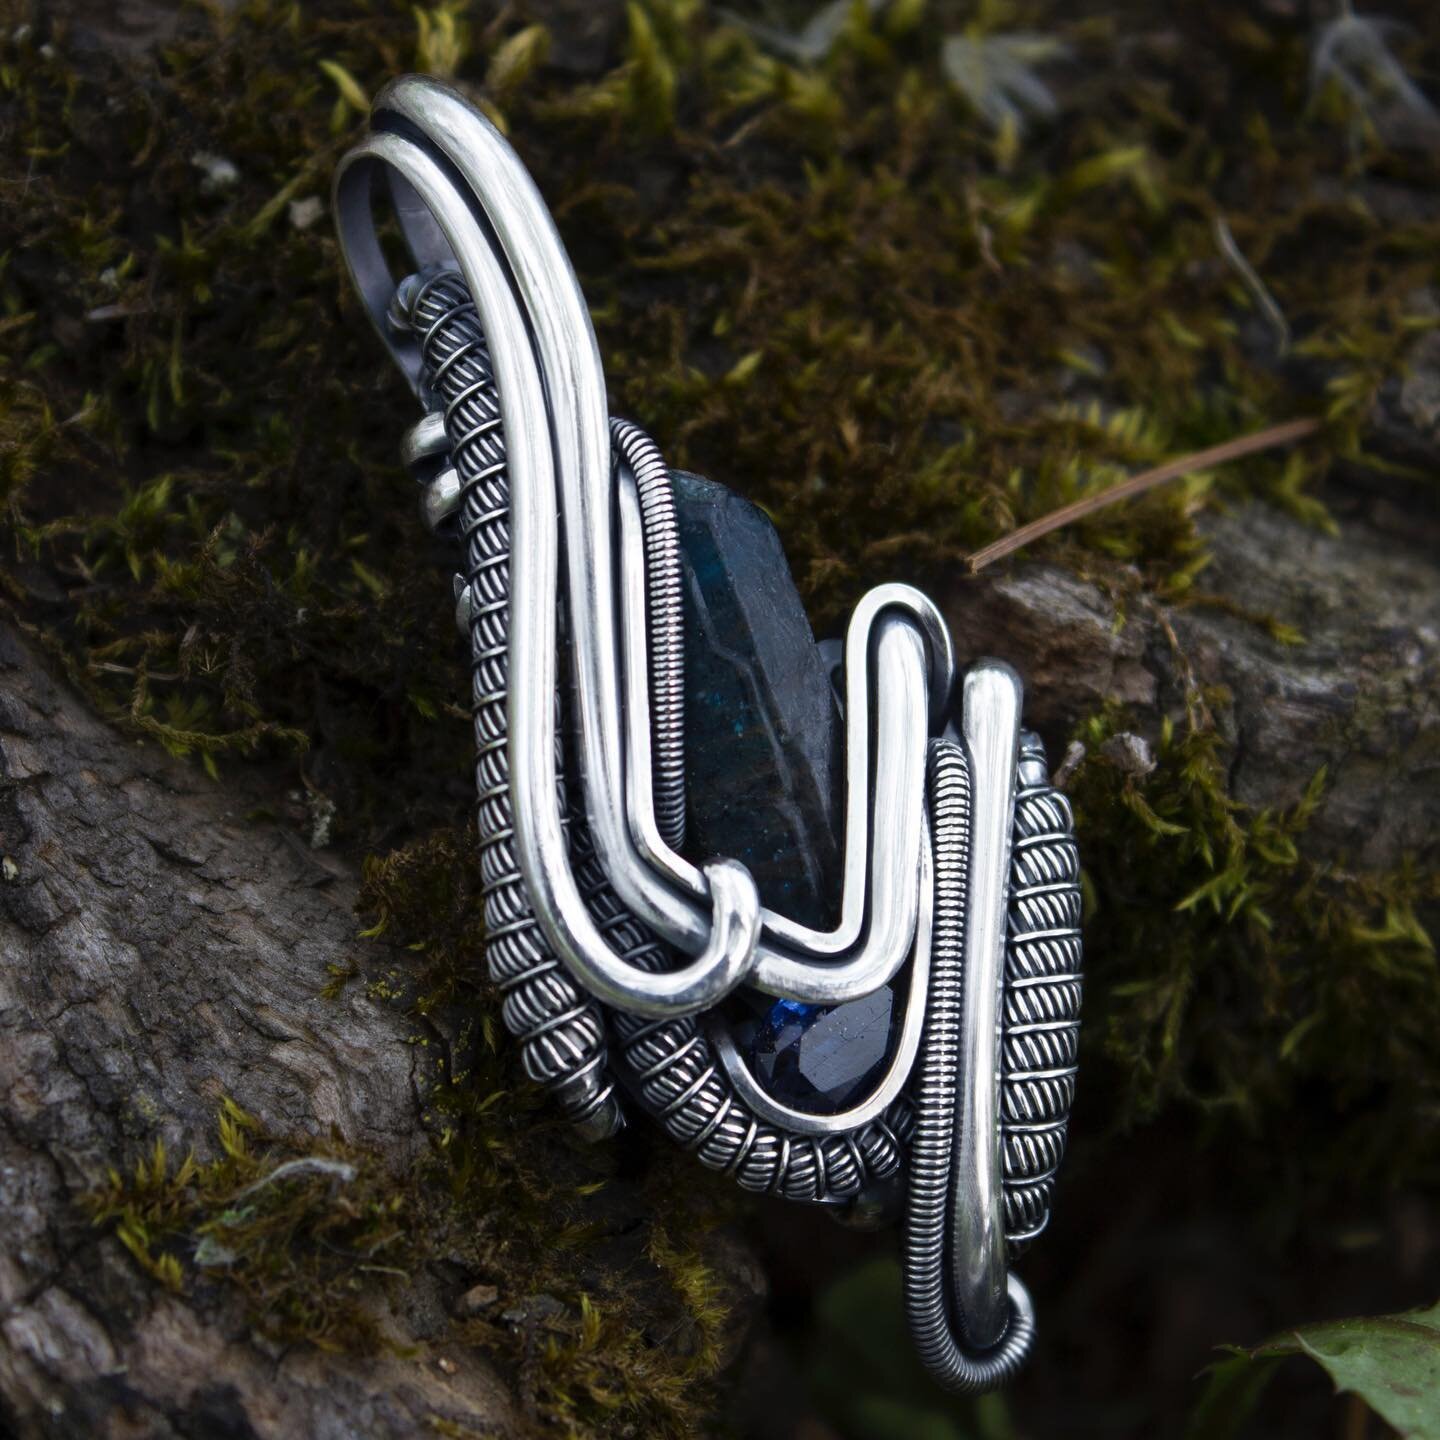 Introducing Isbjorn, featuring apatite and kyanite 💙💙💙 
.
.
.
.
.
.
.
#wirewrap #wirewrapped #wirependants #sterlingsilverjewelry #apatite #kyanite #bluecrystals #wirewrappedjewelry #headypendant